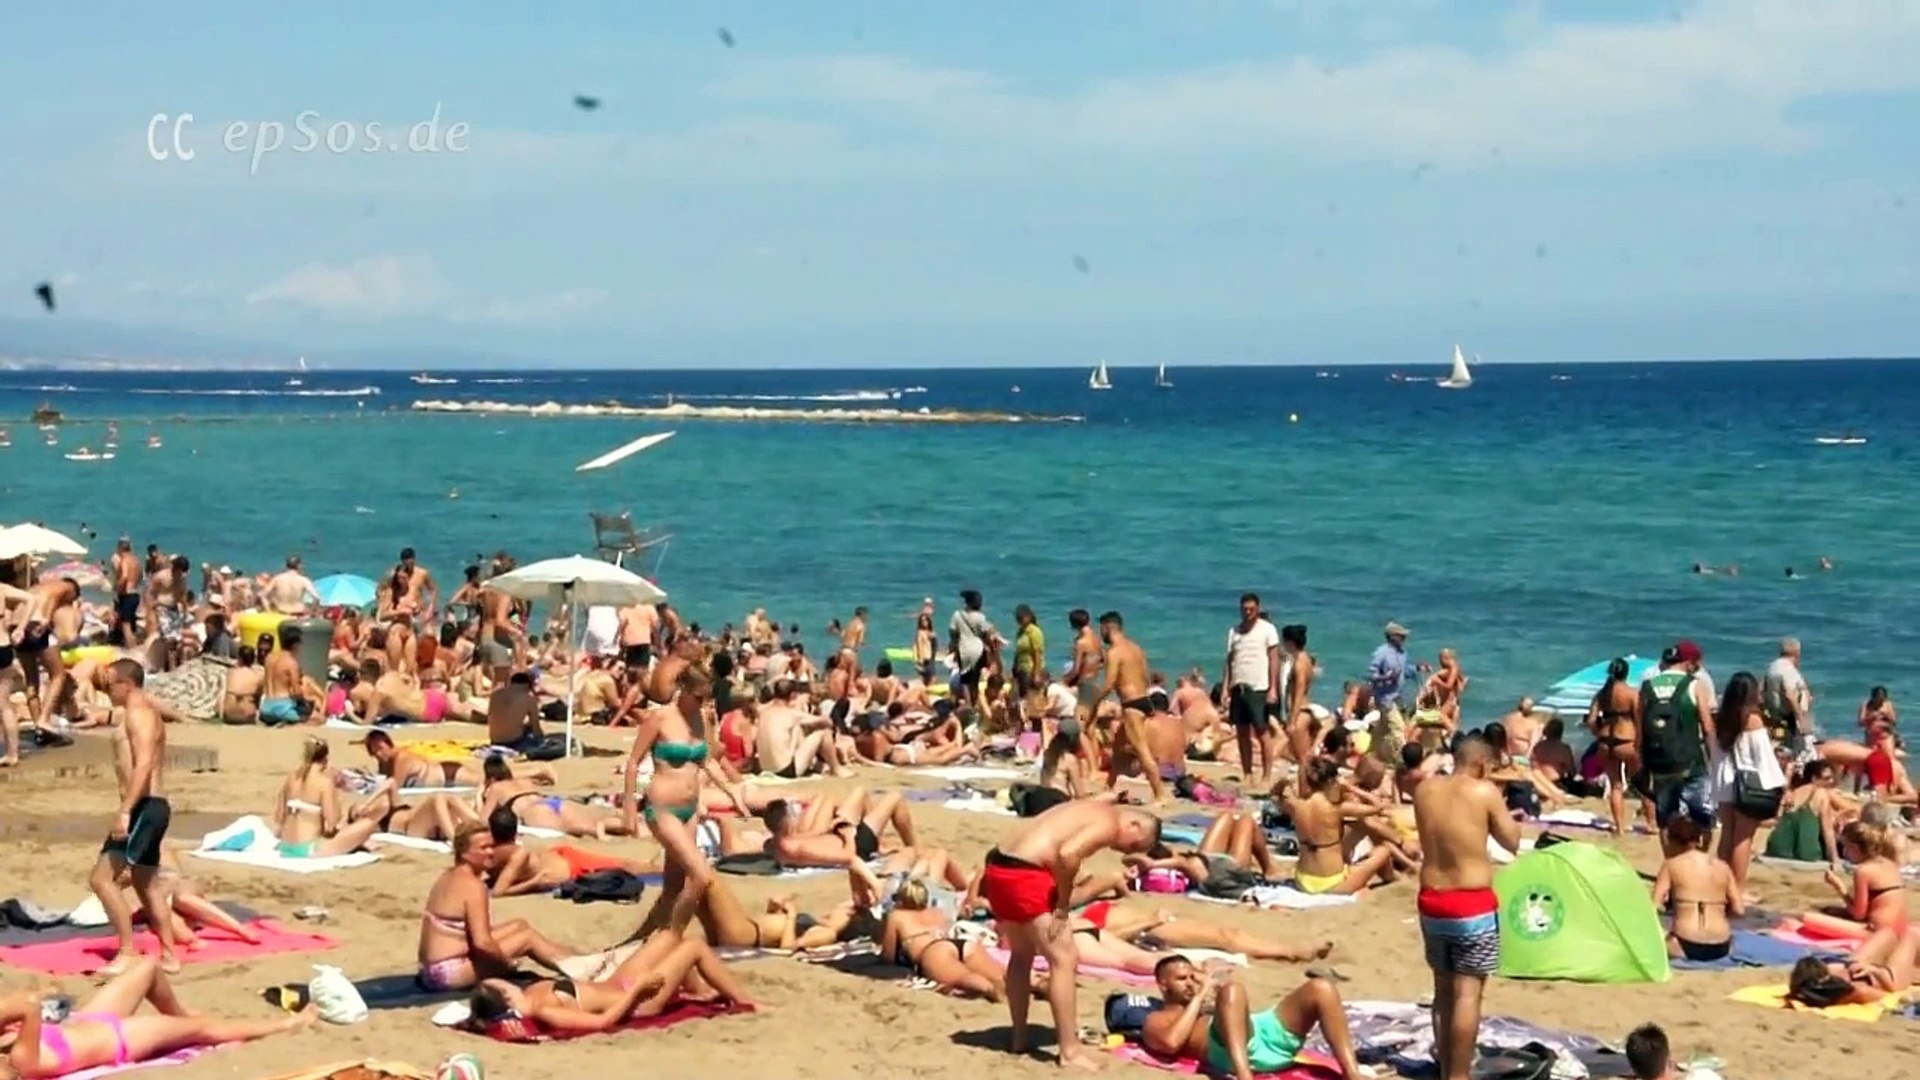 Sand Nude Beach Sex - Sex party at Barcelona Beach of Barceloneta